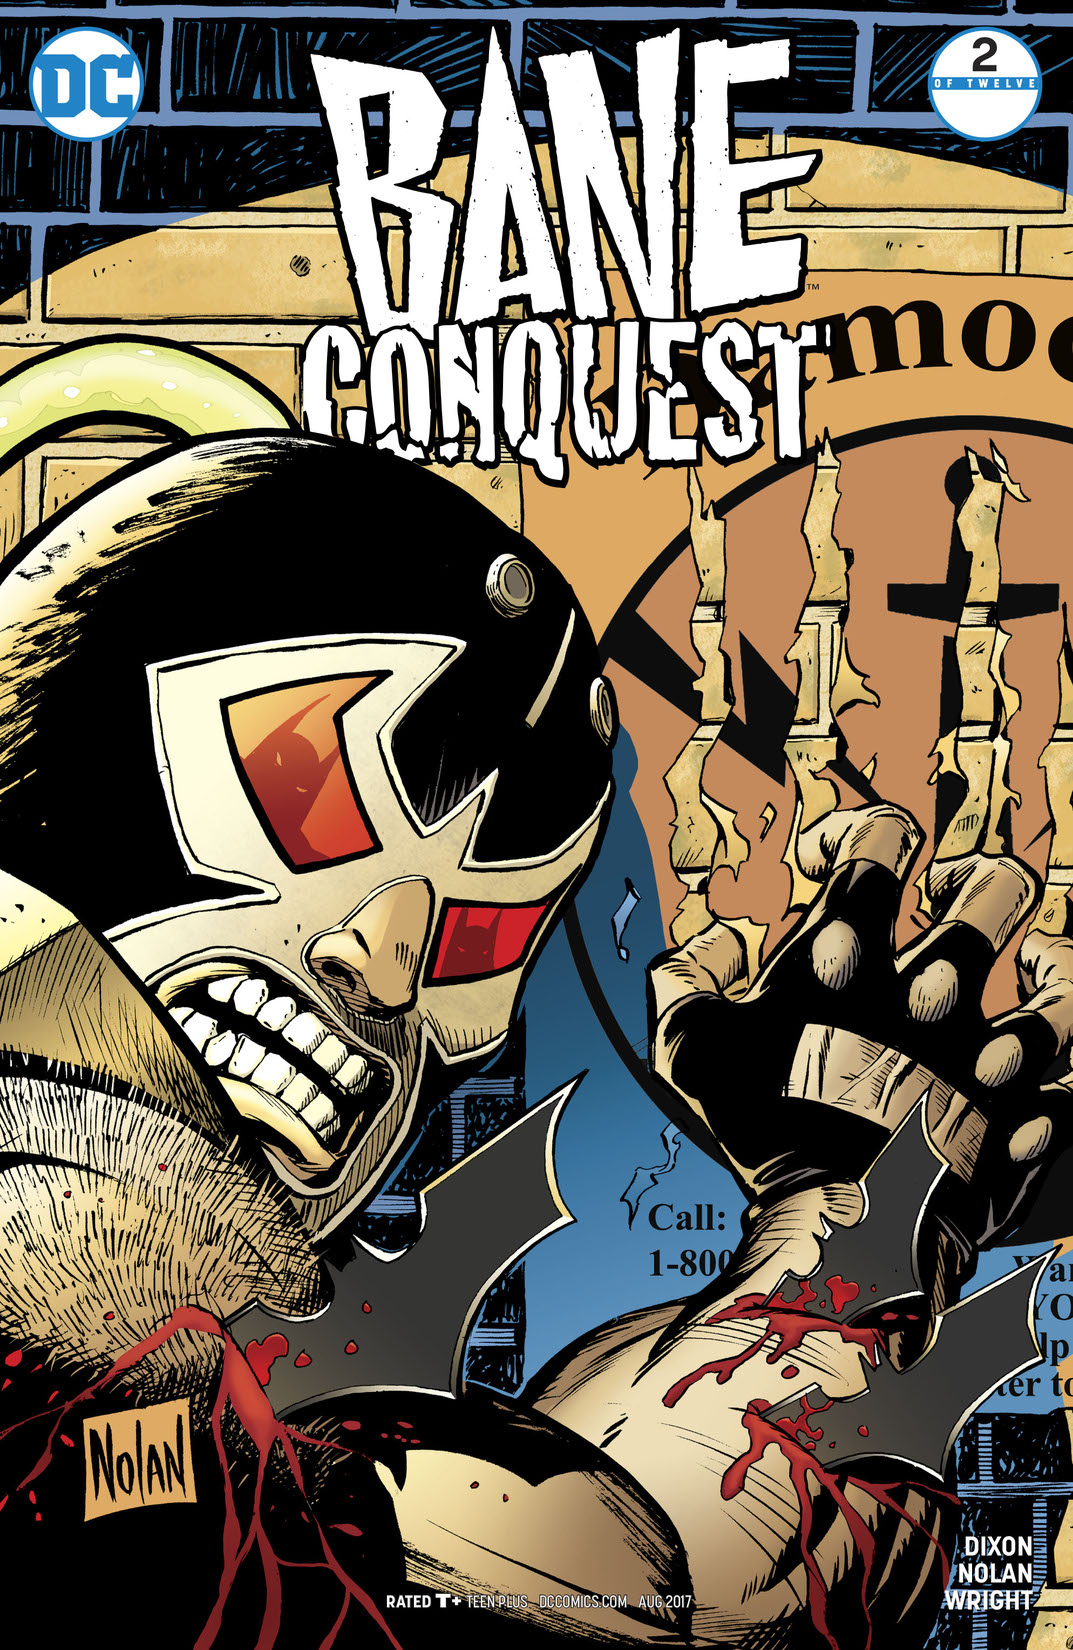 Bane: Conquest #2 preview images